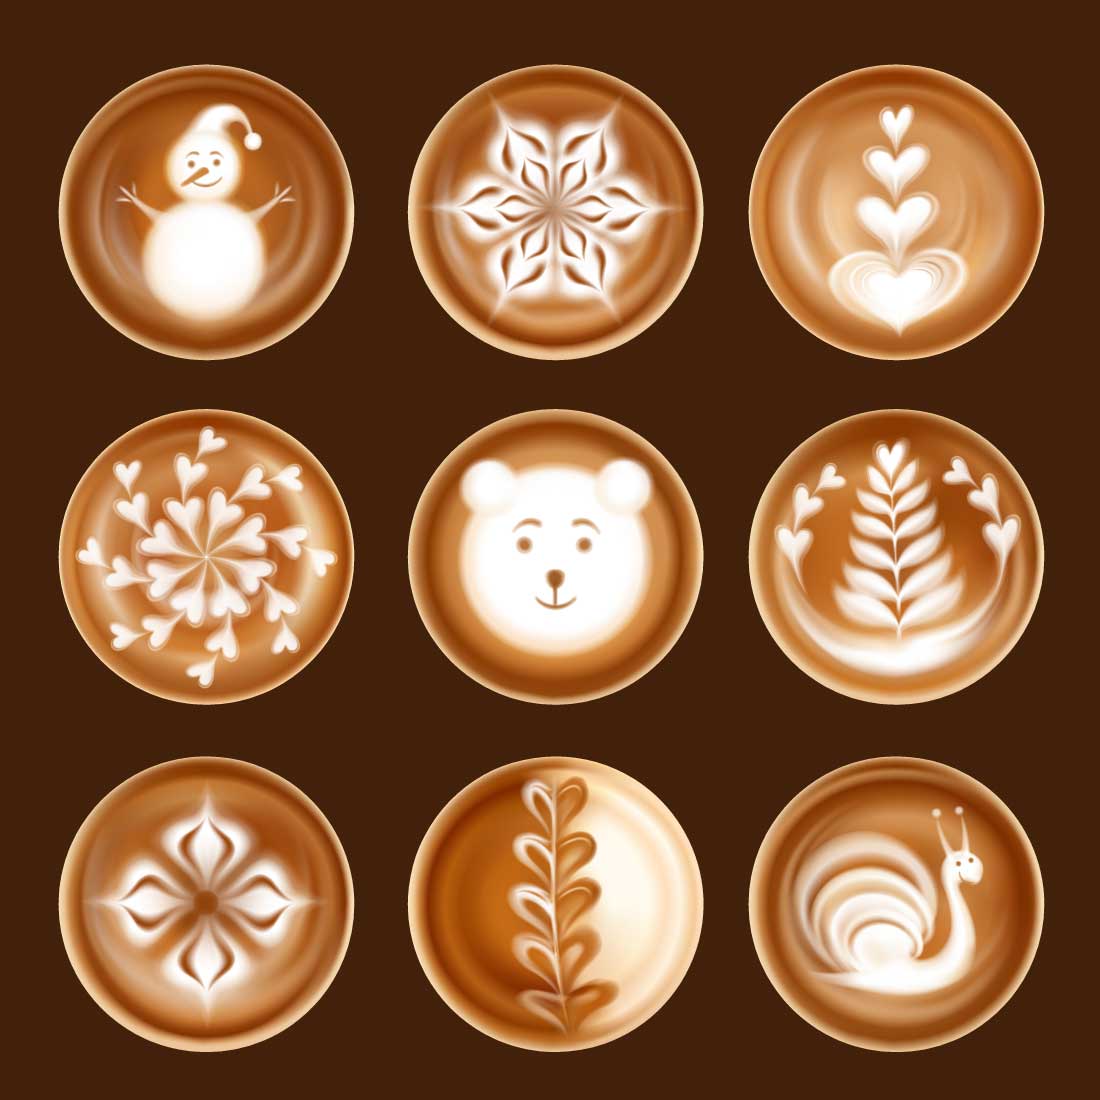 latte-art illustrations preview image.